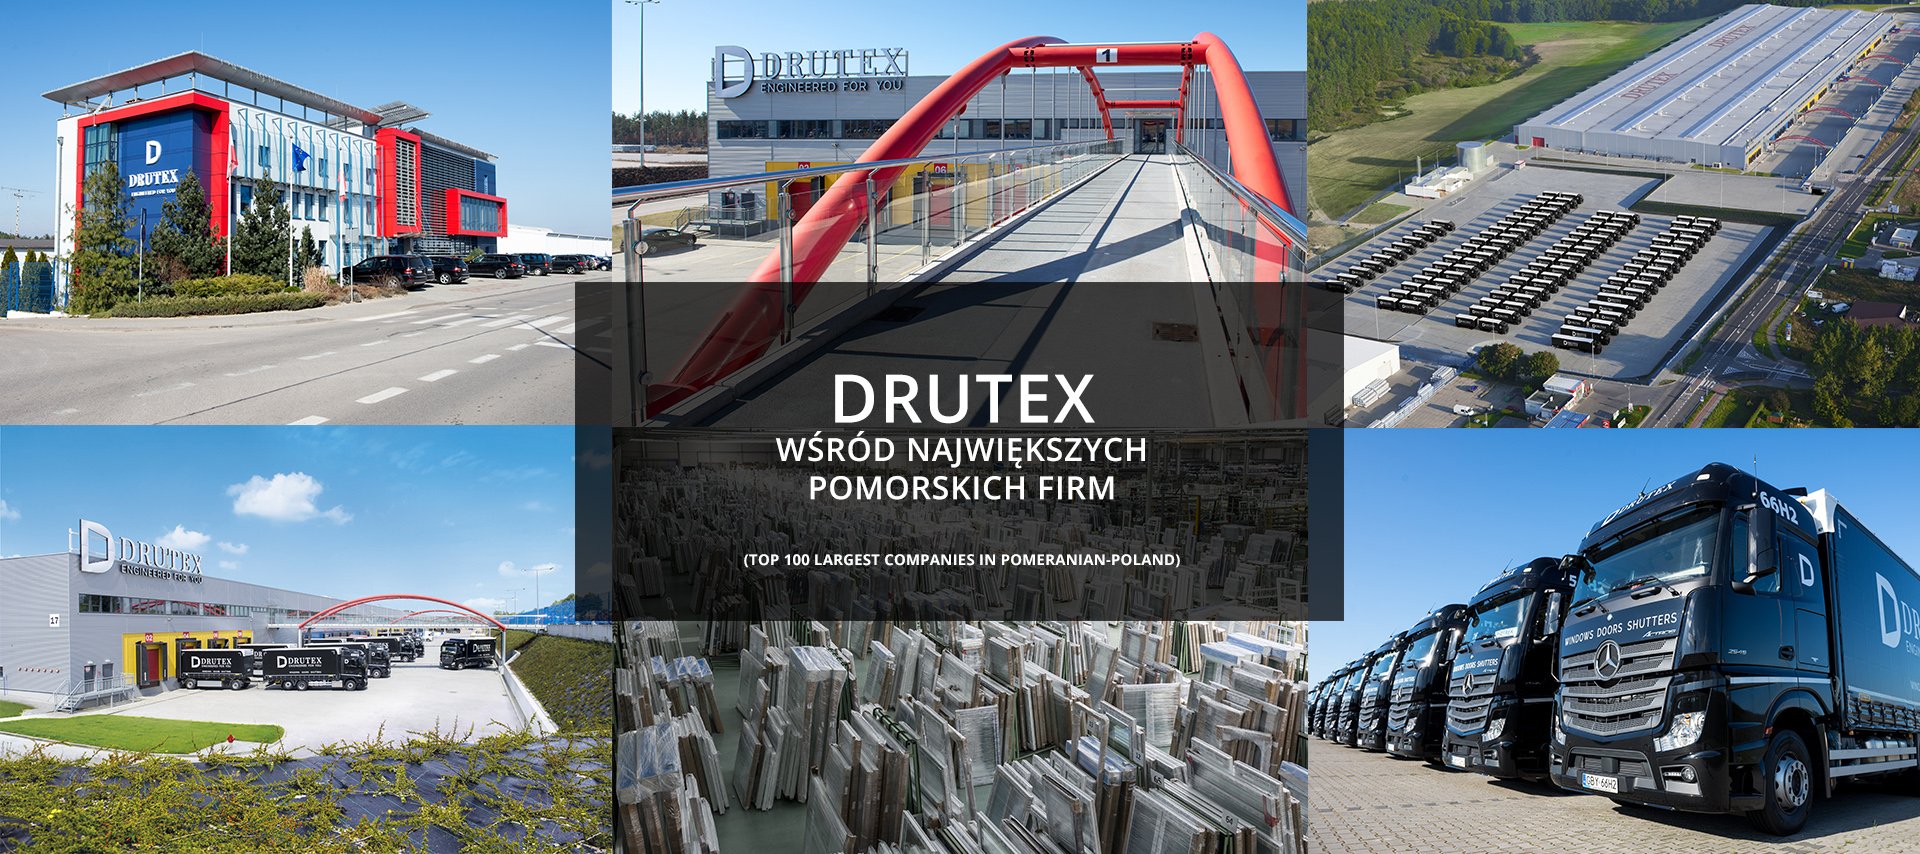 Drutex among the biggest Pomeranian companies